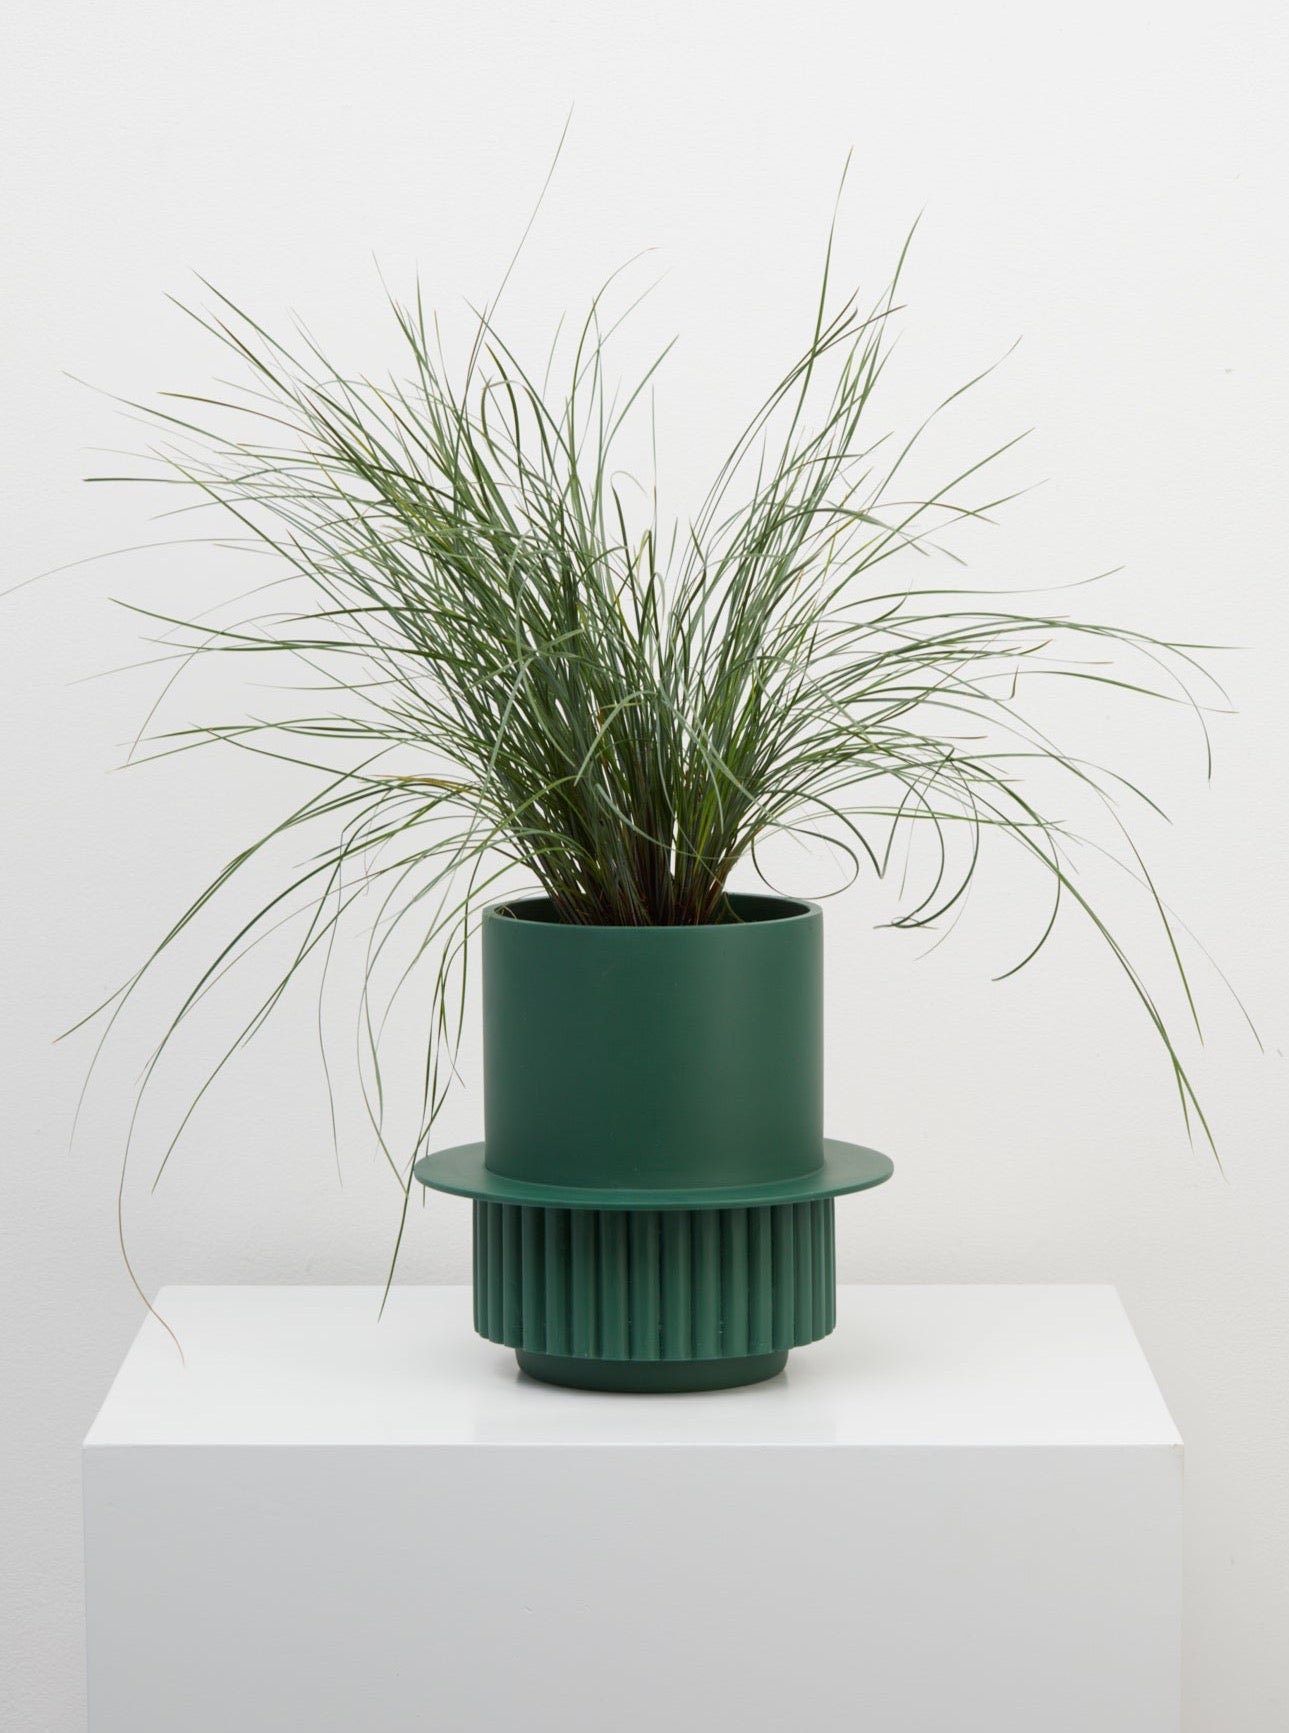 Emerald Roma designer pot with plant